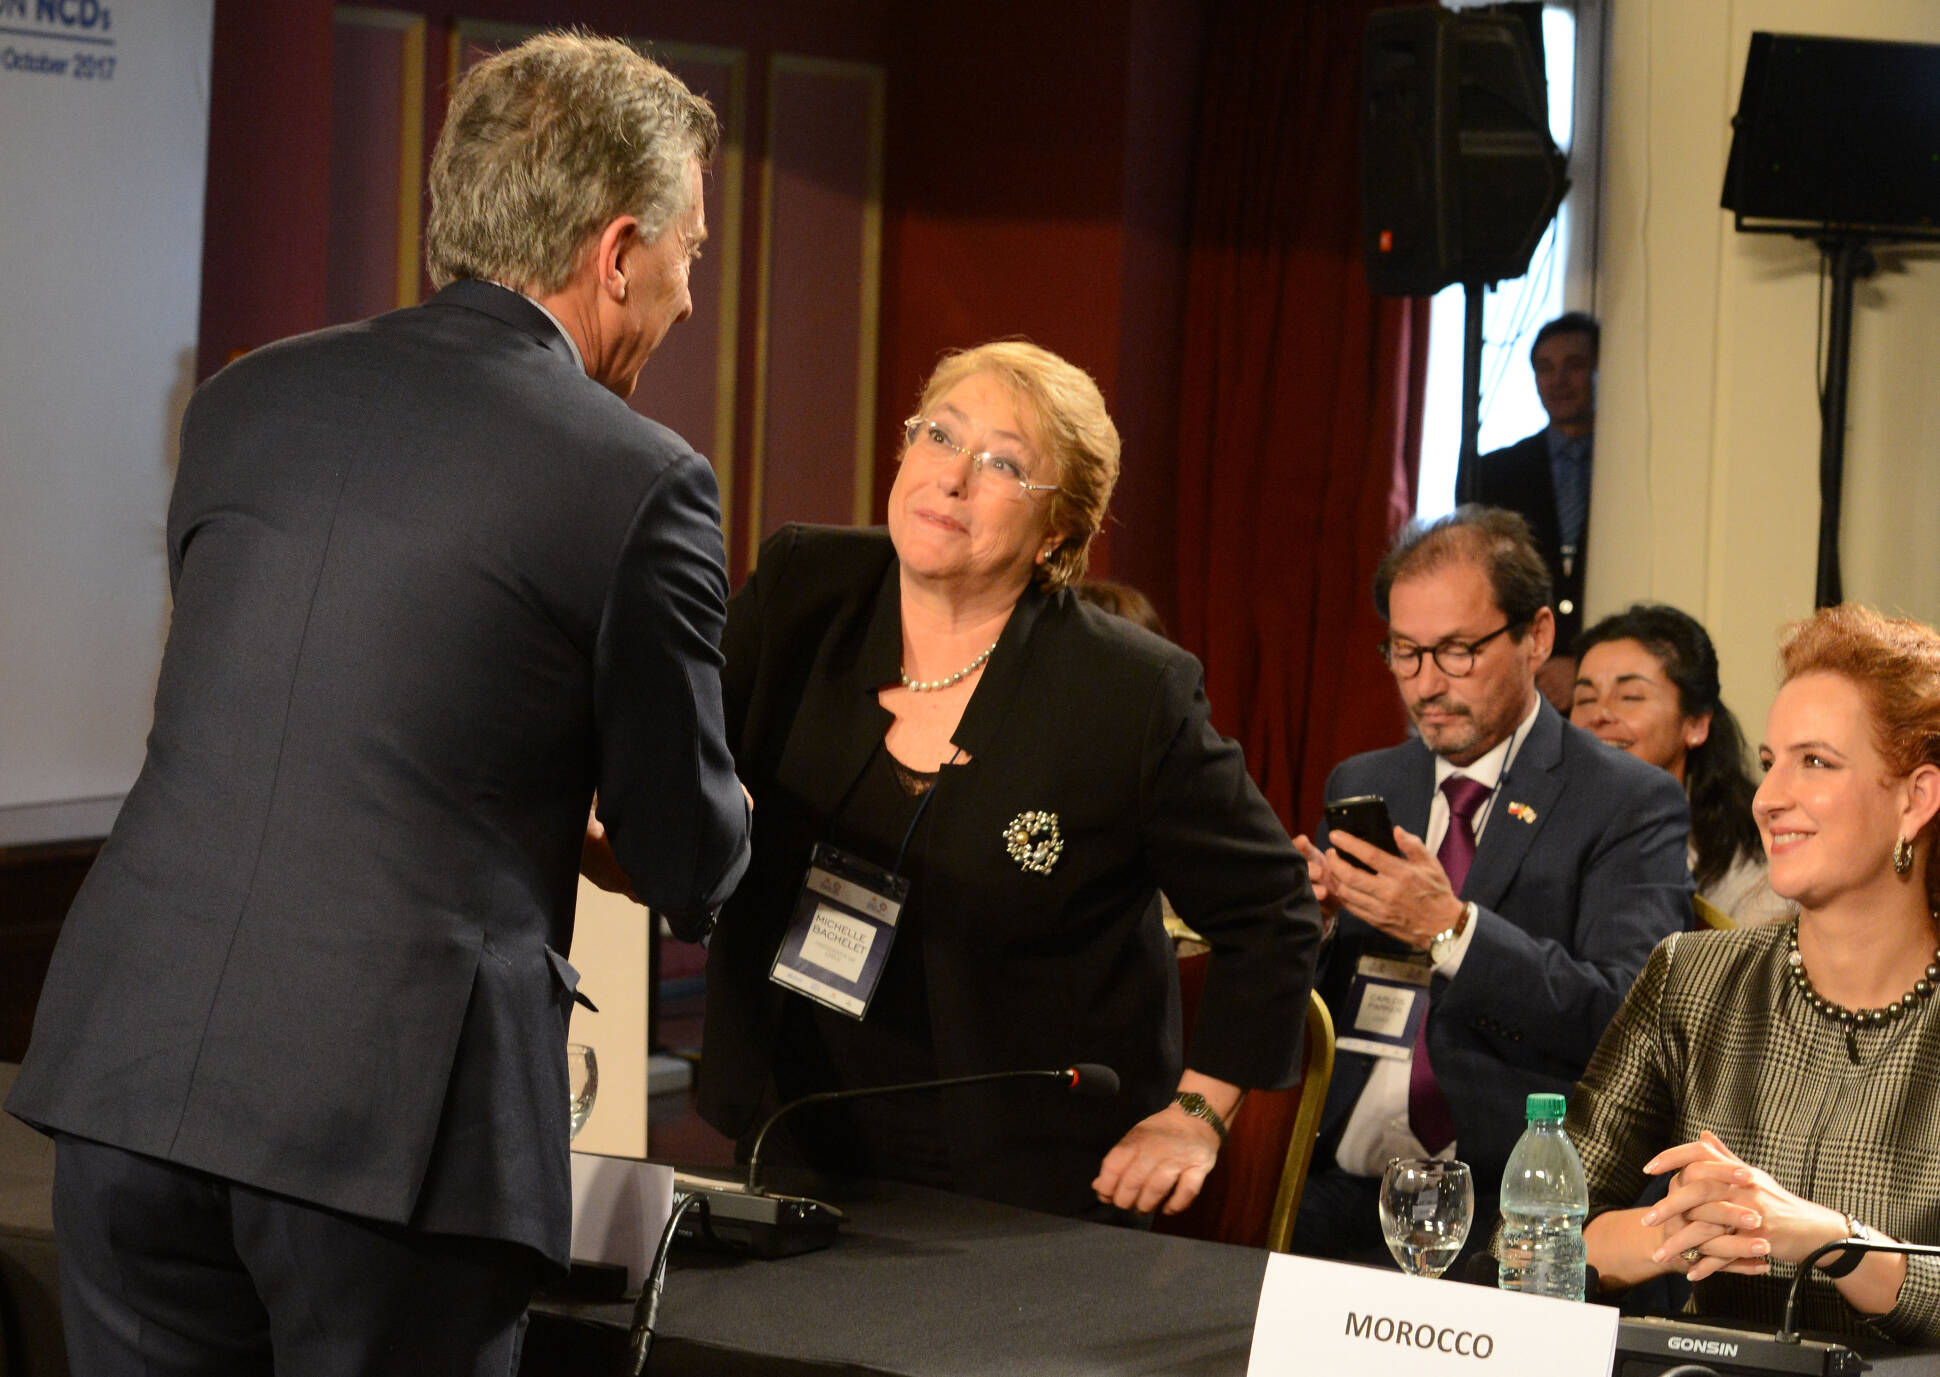 Macri asistió a la apertura de la Conferencia Mundial sobre Enfermedades No Transmisibles en Uruguay